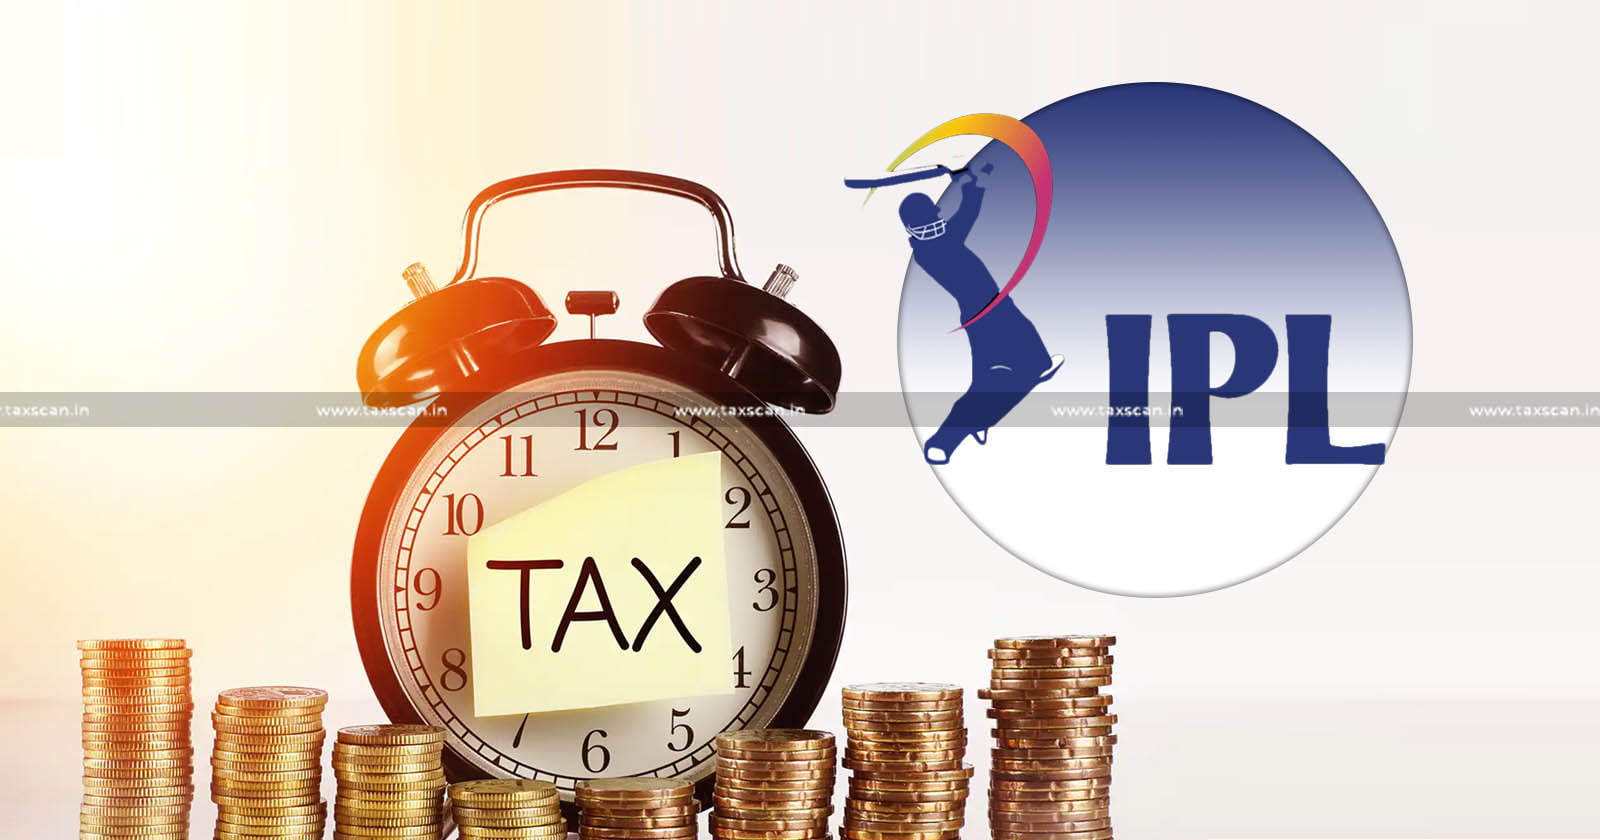 IPL Conundrum - IPL - IPL Scores - Tax - IPL Tax - IPL Matches - IPL Matches scores revenue - IPL Ground - IPL Matches ground - taxscan